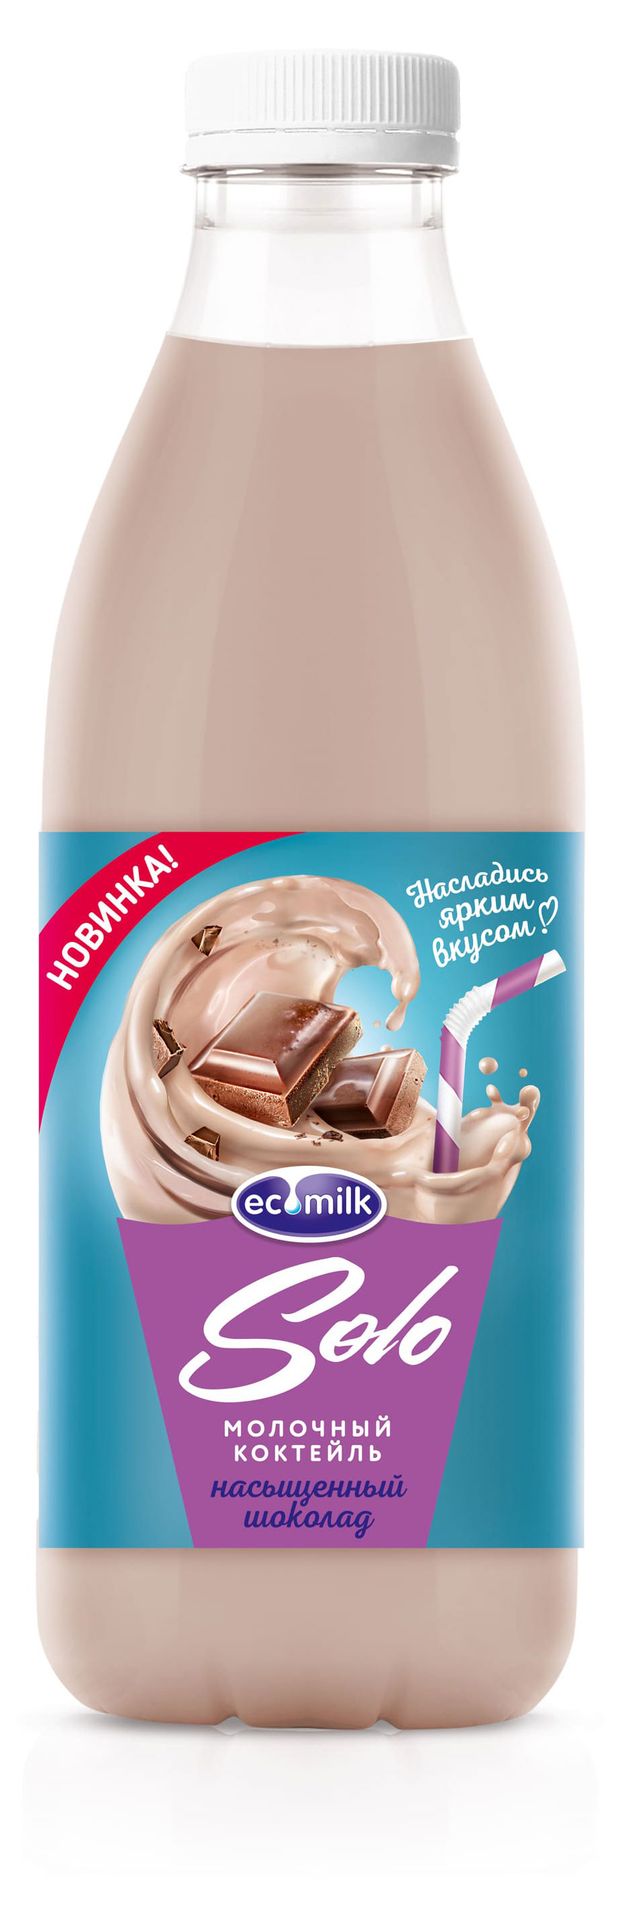 Молочный коктейль Ecomilk.Solo Насыщенный шоколад 2% 930 мл